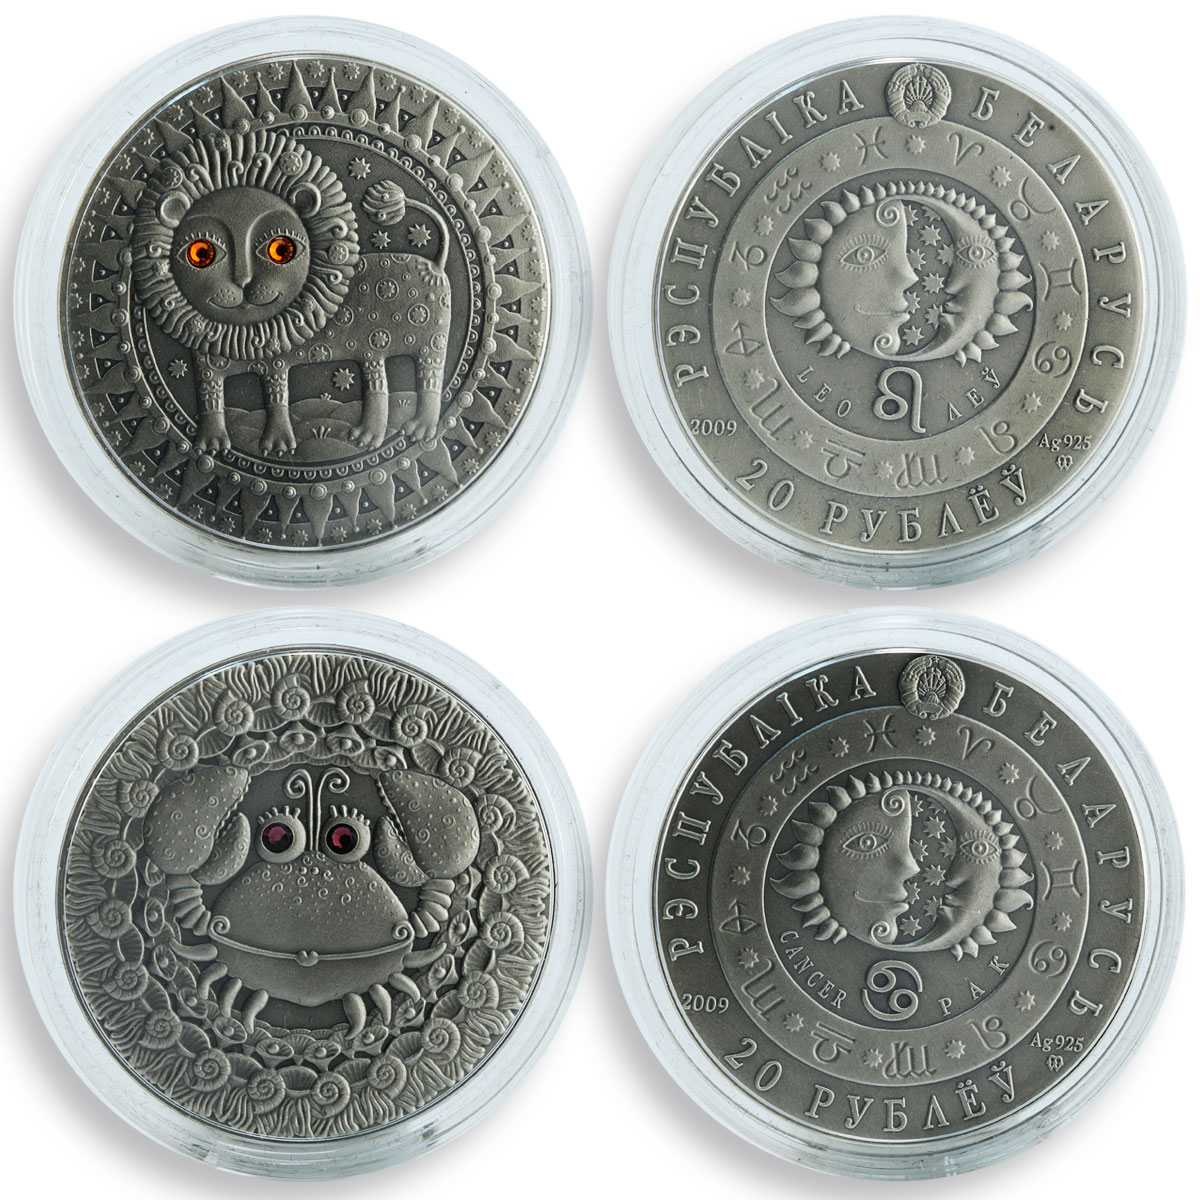 Belarus 20 roubles set of 12 coins Zodiac Swarowski 2009